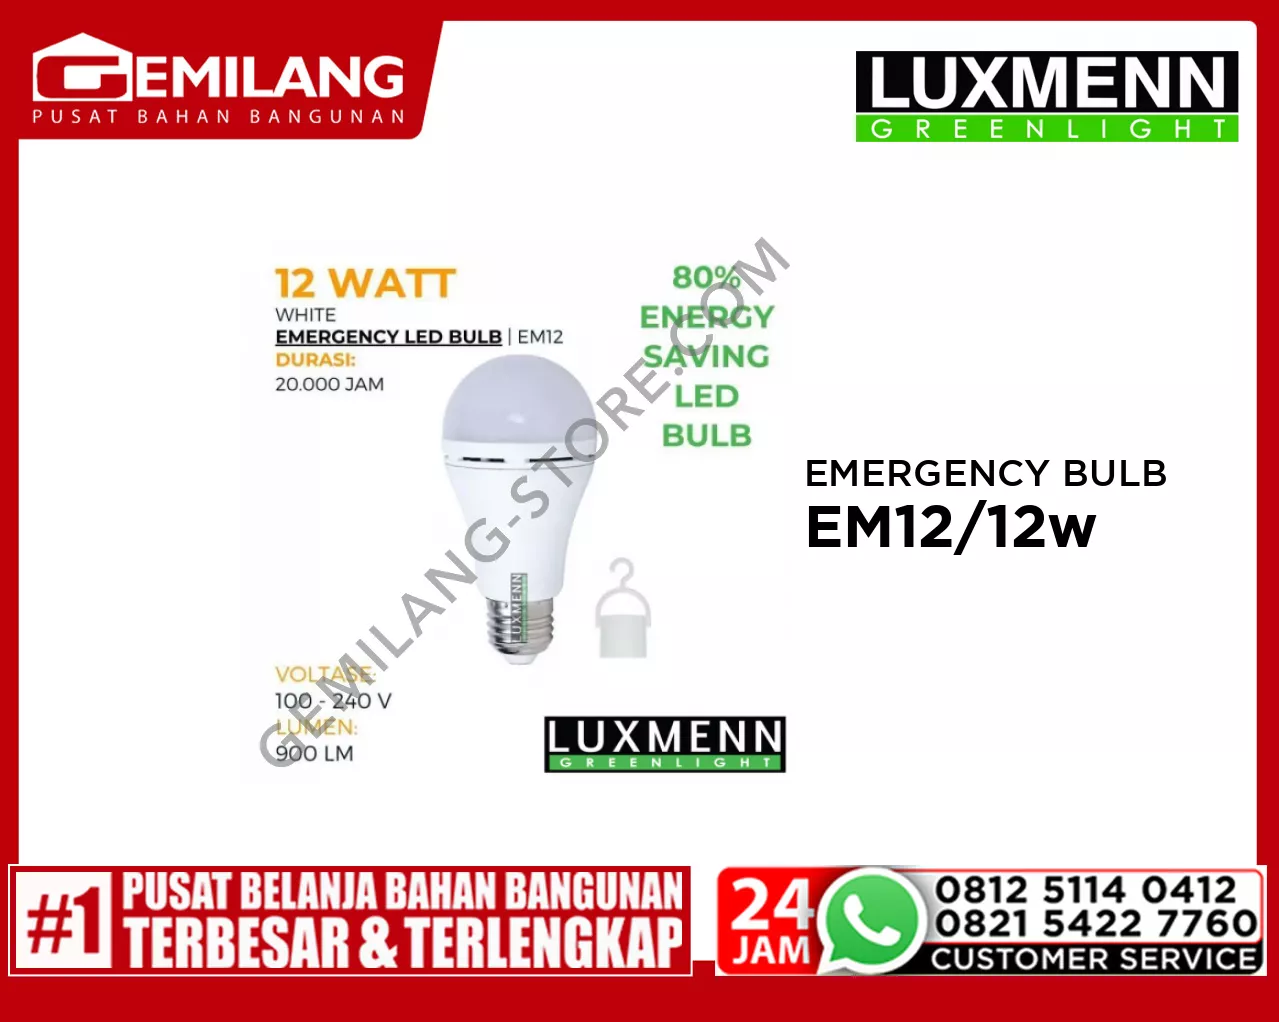 LUXMENN EMERGENCY BULB LUX EM12/12w